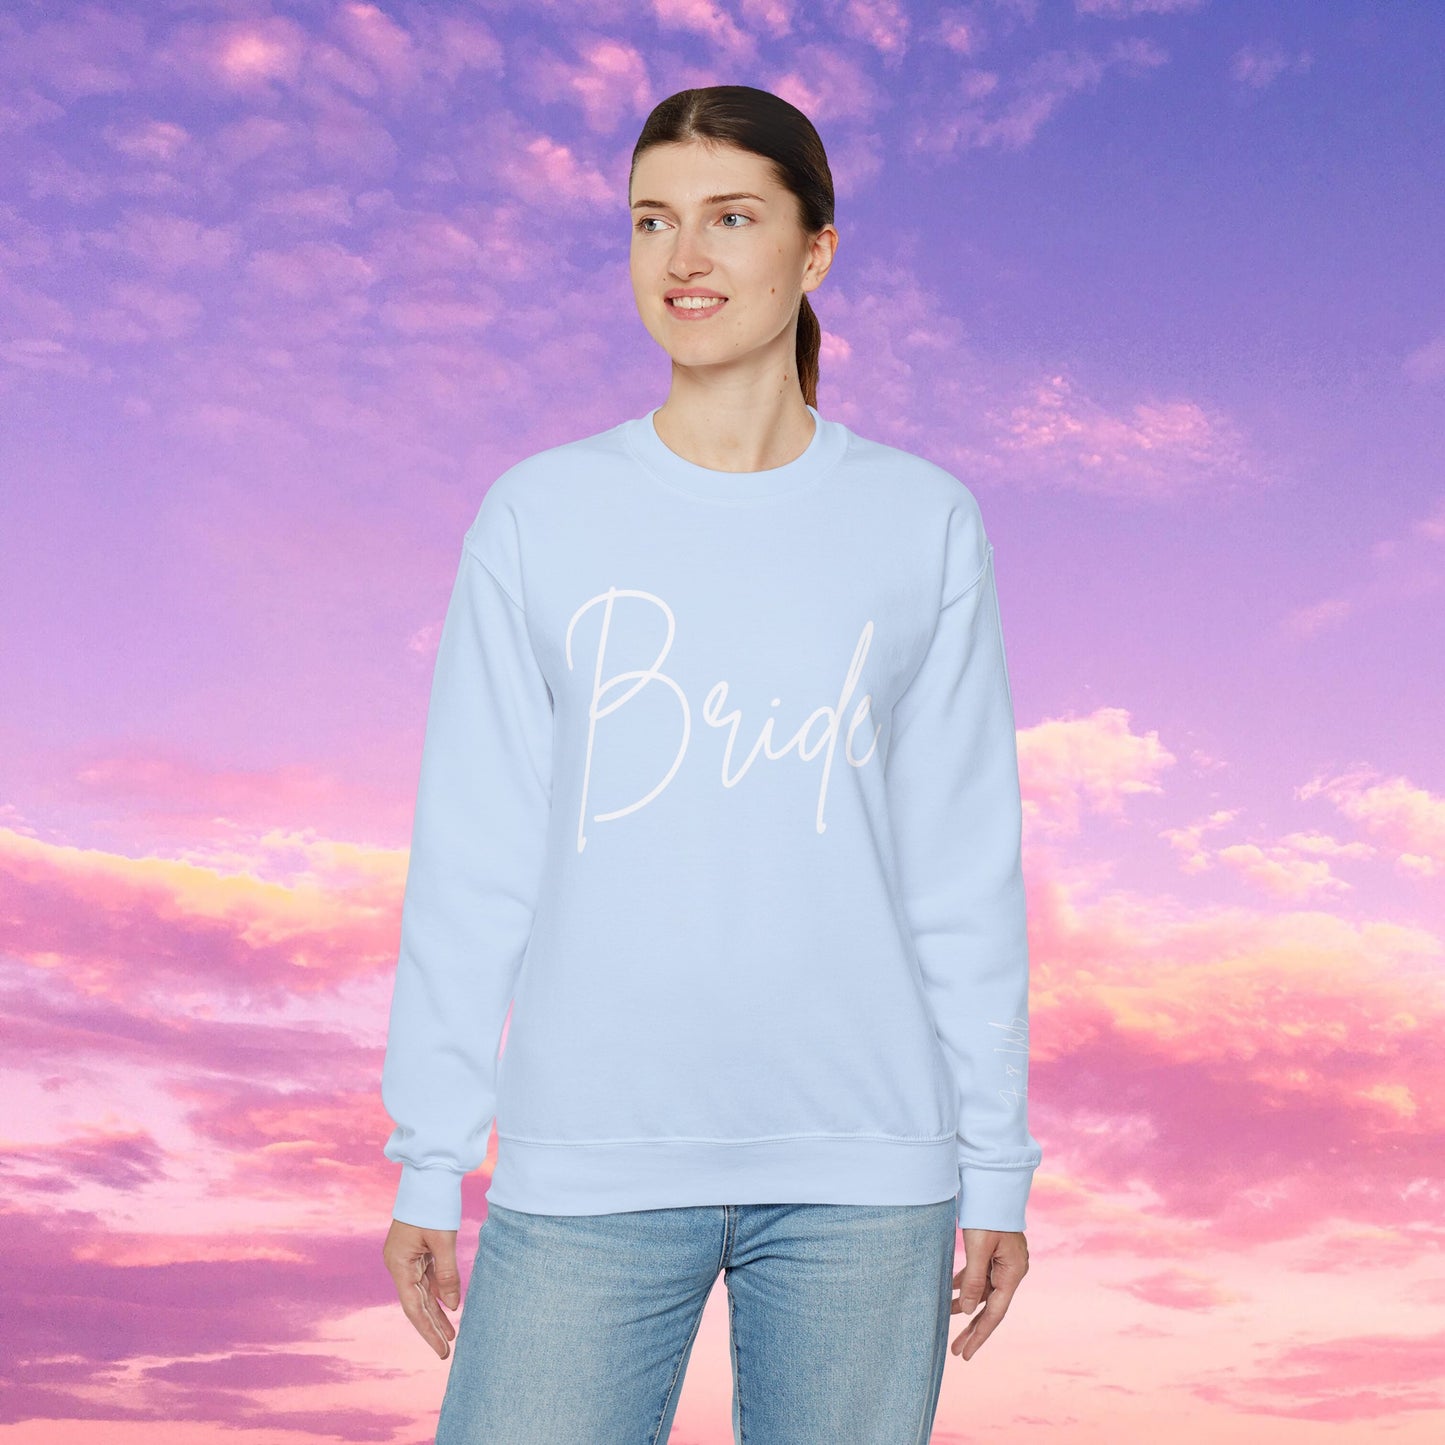 Bride Sweatshirt With Personalized Initials On Left Sleeve Sweatshirt Brides by Emilia Milan 